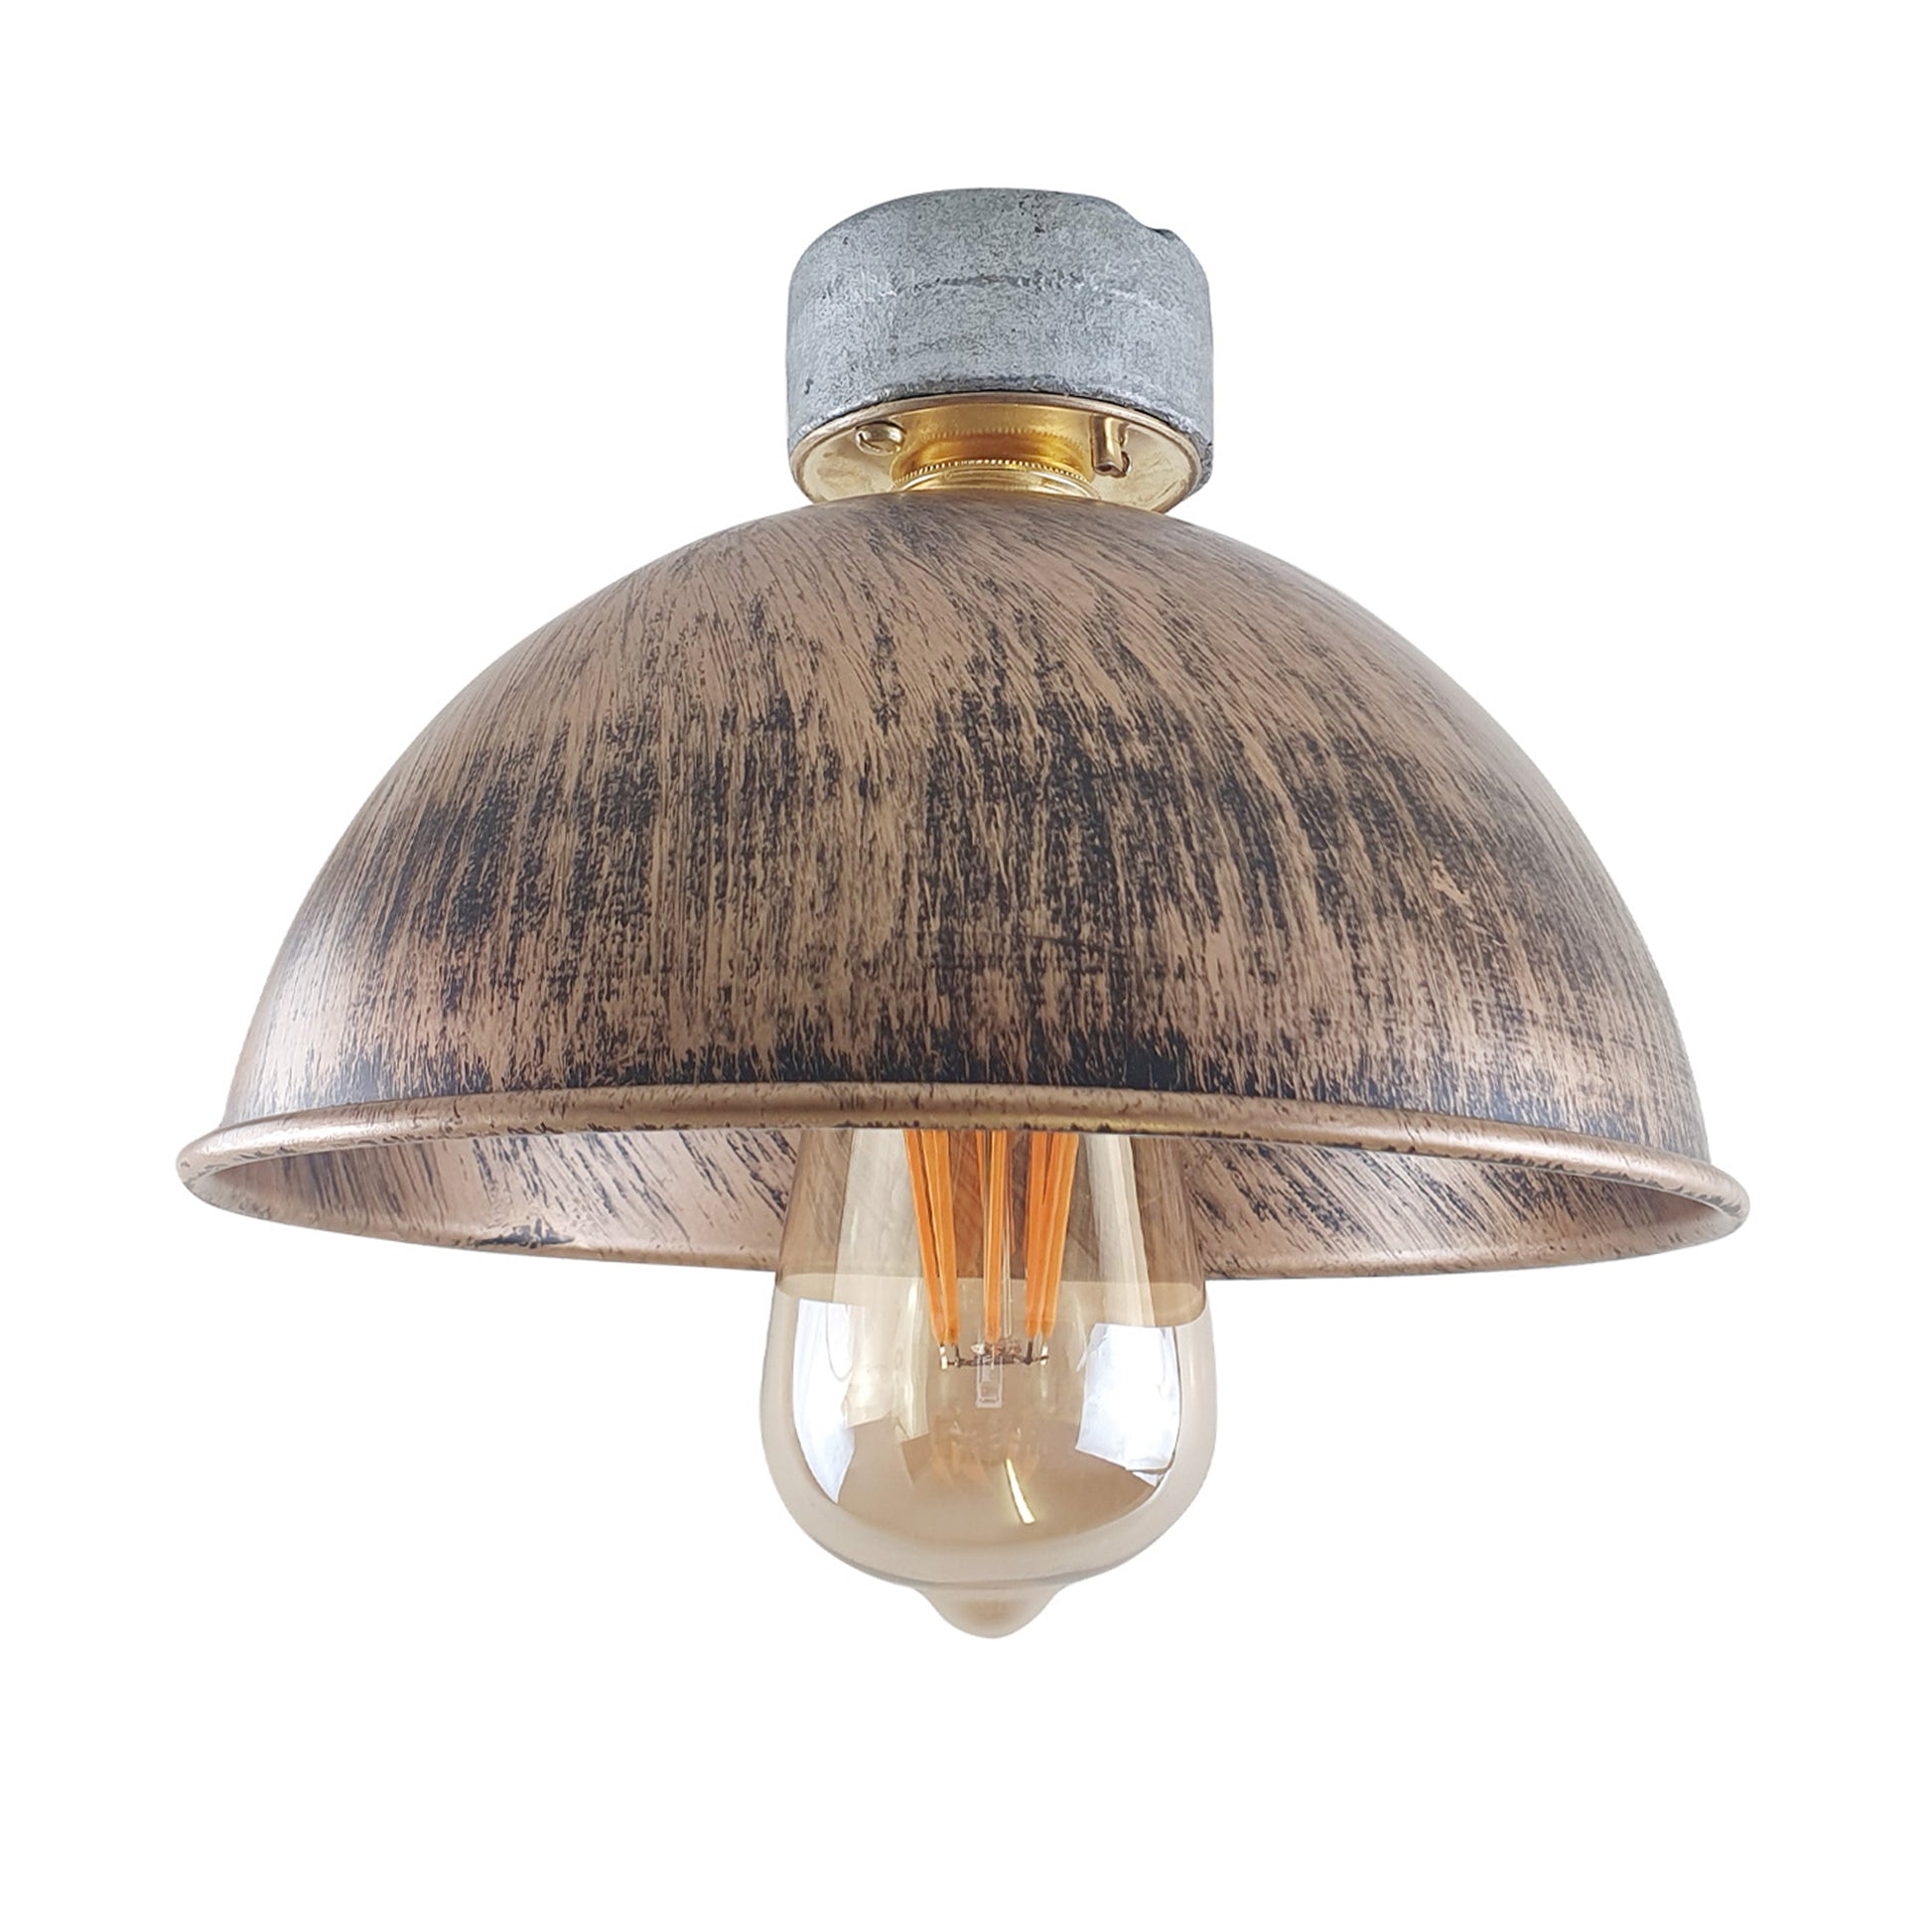 Brushed Copper Ceiling Light Lampshade Fitting Industrial Design B22 Lighting~1566 - LEDSone UK Ltd